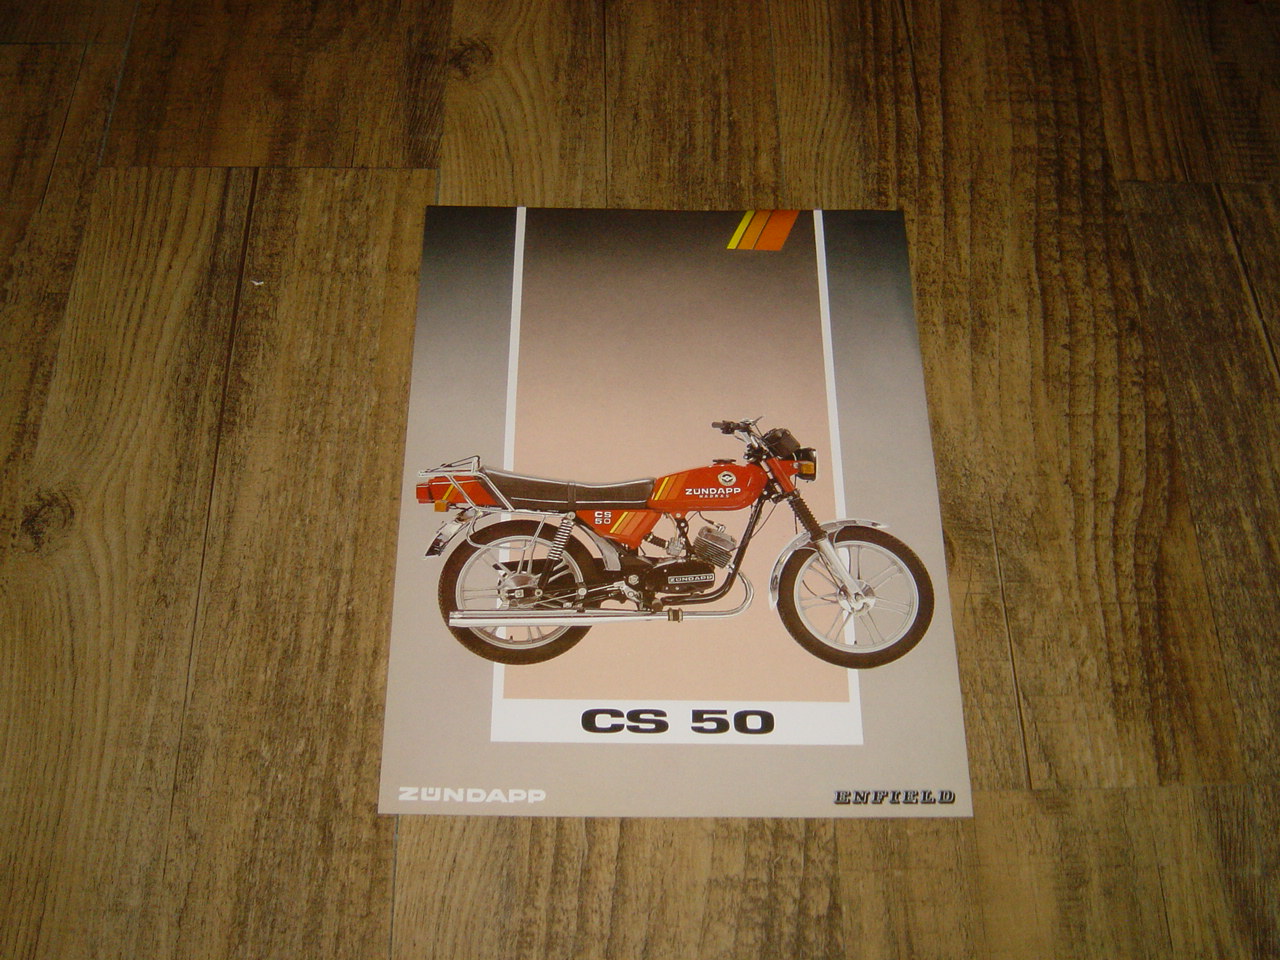 Promotional brochure D - Enfield CS 50